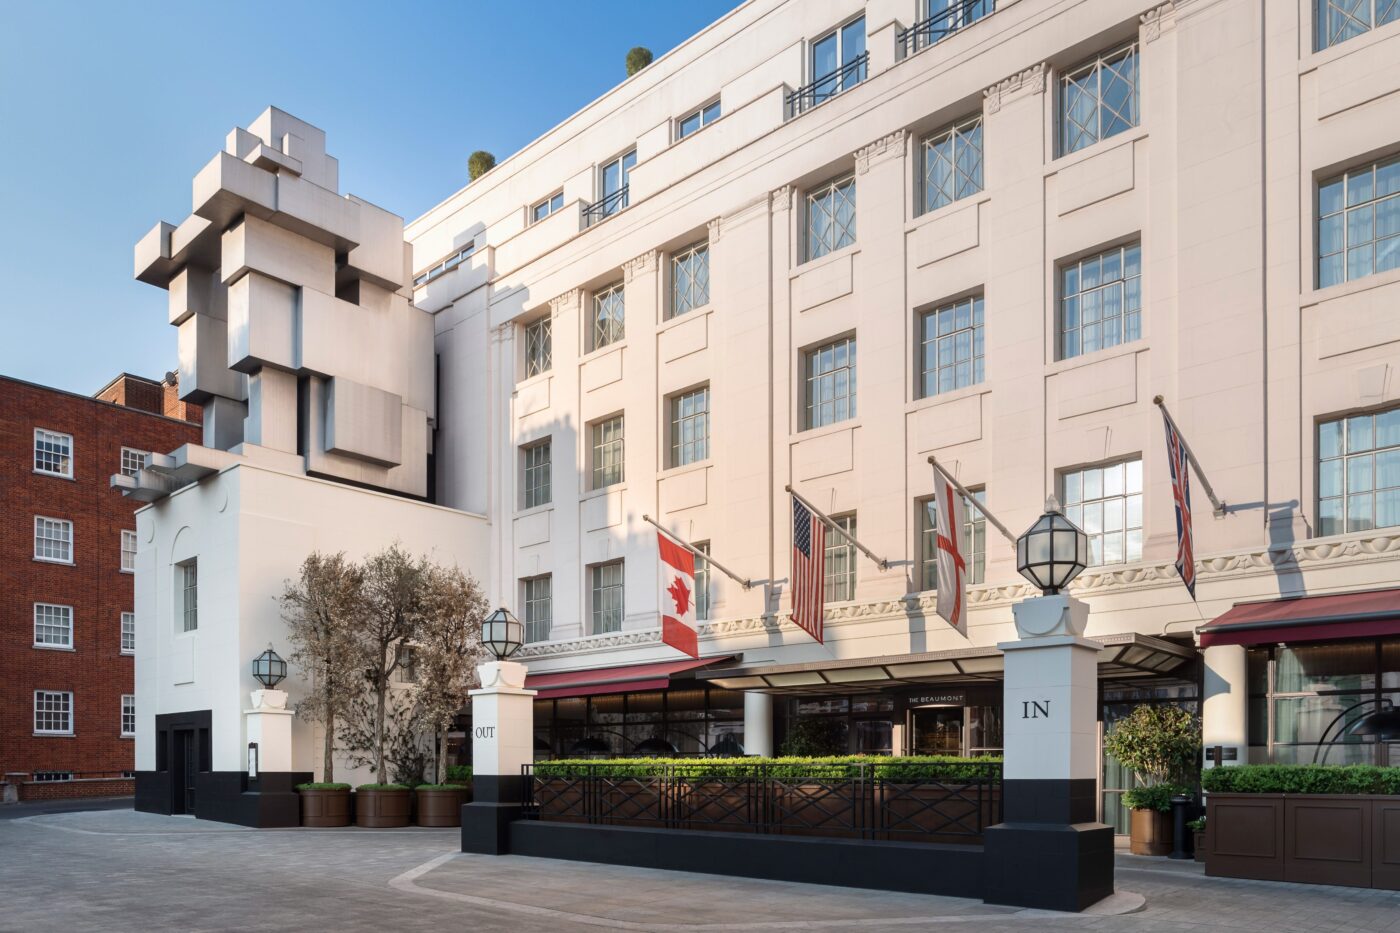 A First Look Inside Christian Louboutin's Glamorous New Hotel, Vermelho